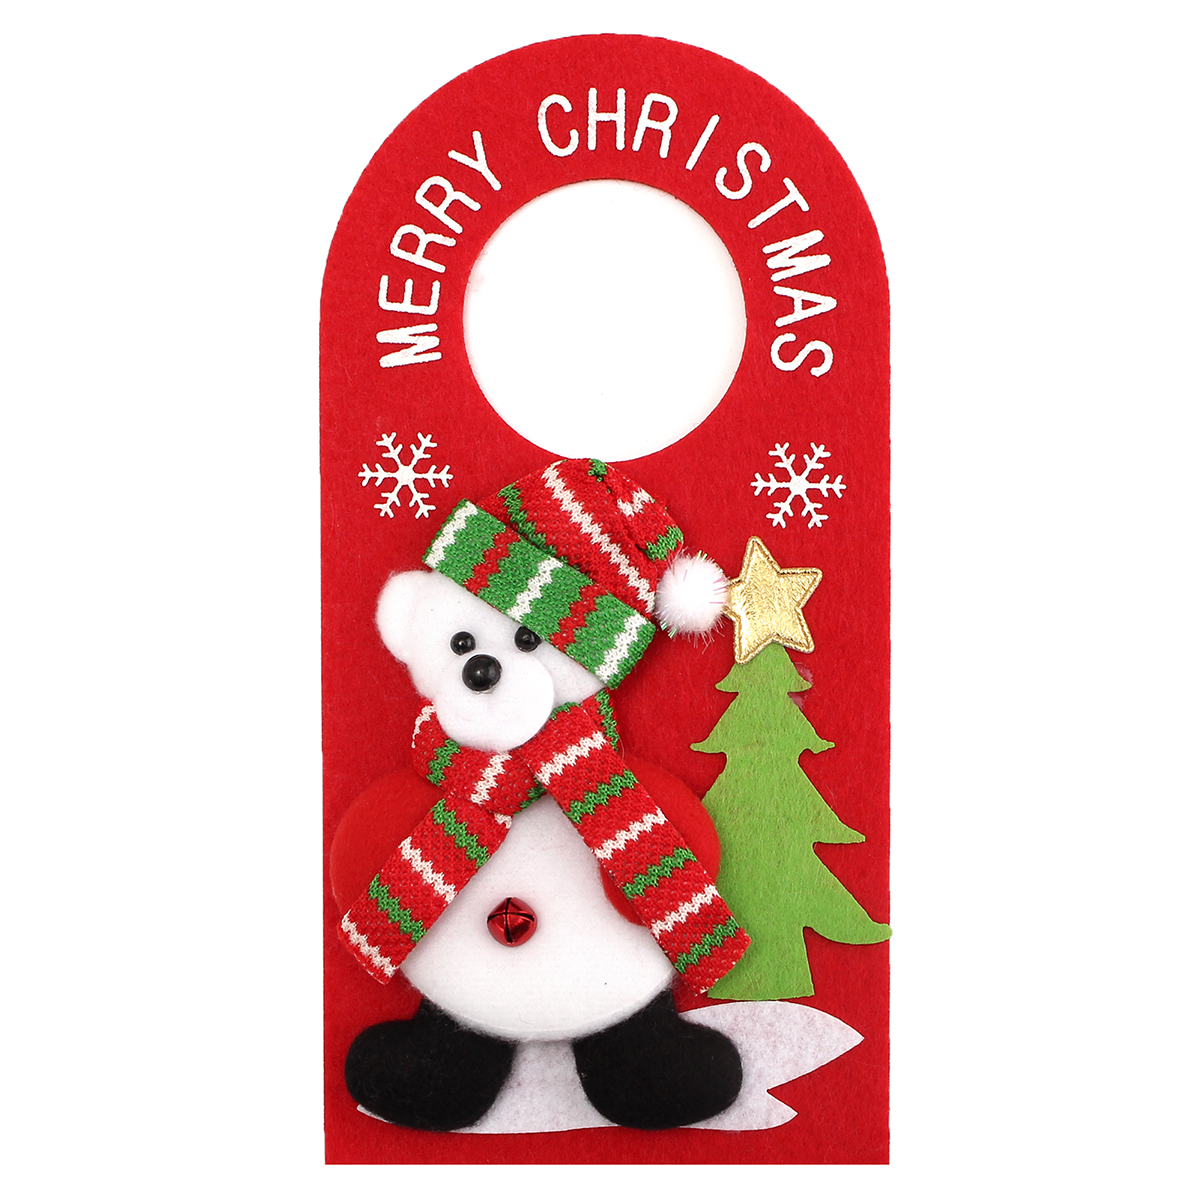 Applique-Style-Christmas-Decor-Beautiful-Detailed-Design-Padded-Felt-Door-Hanger-1106374-5